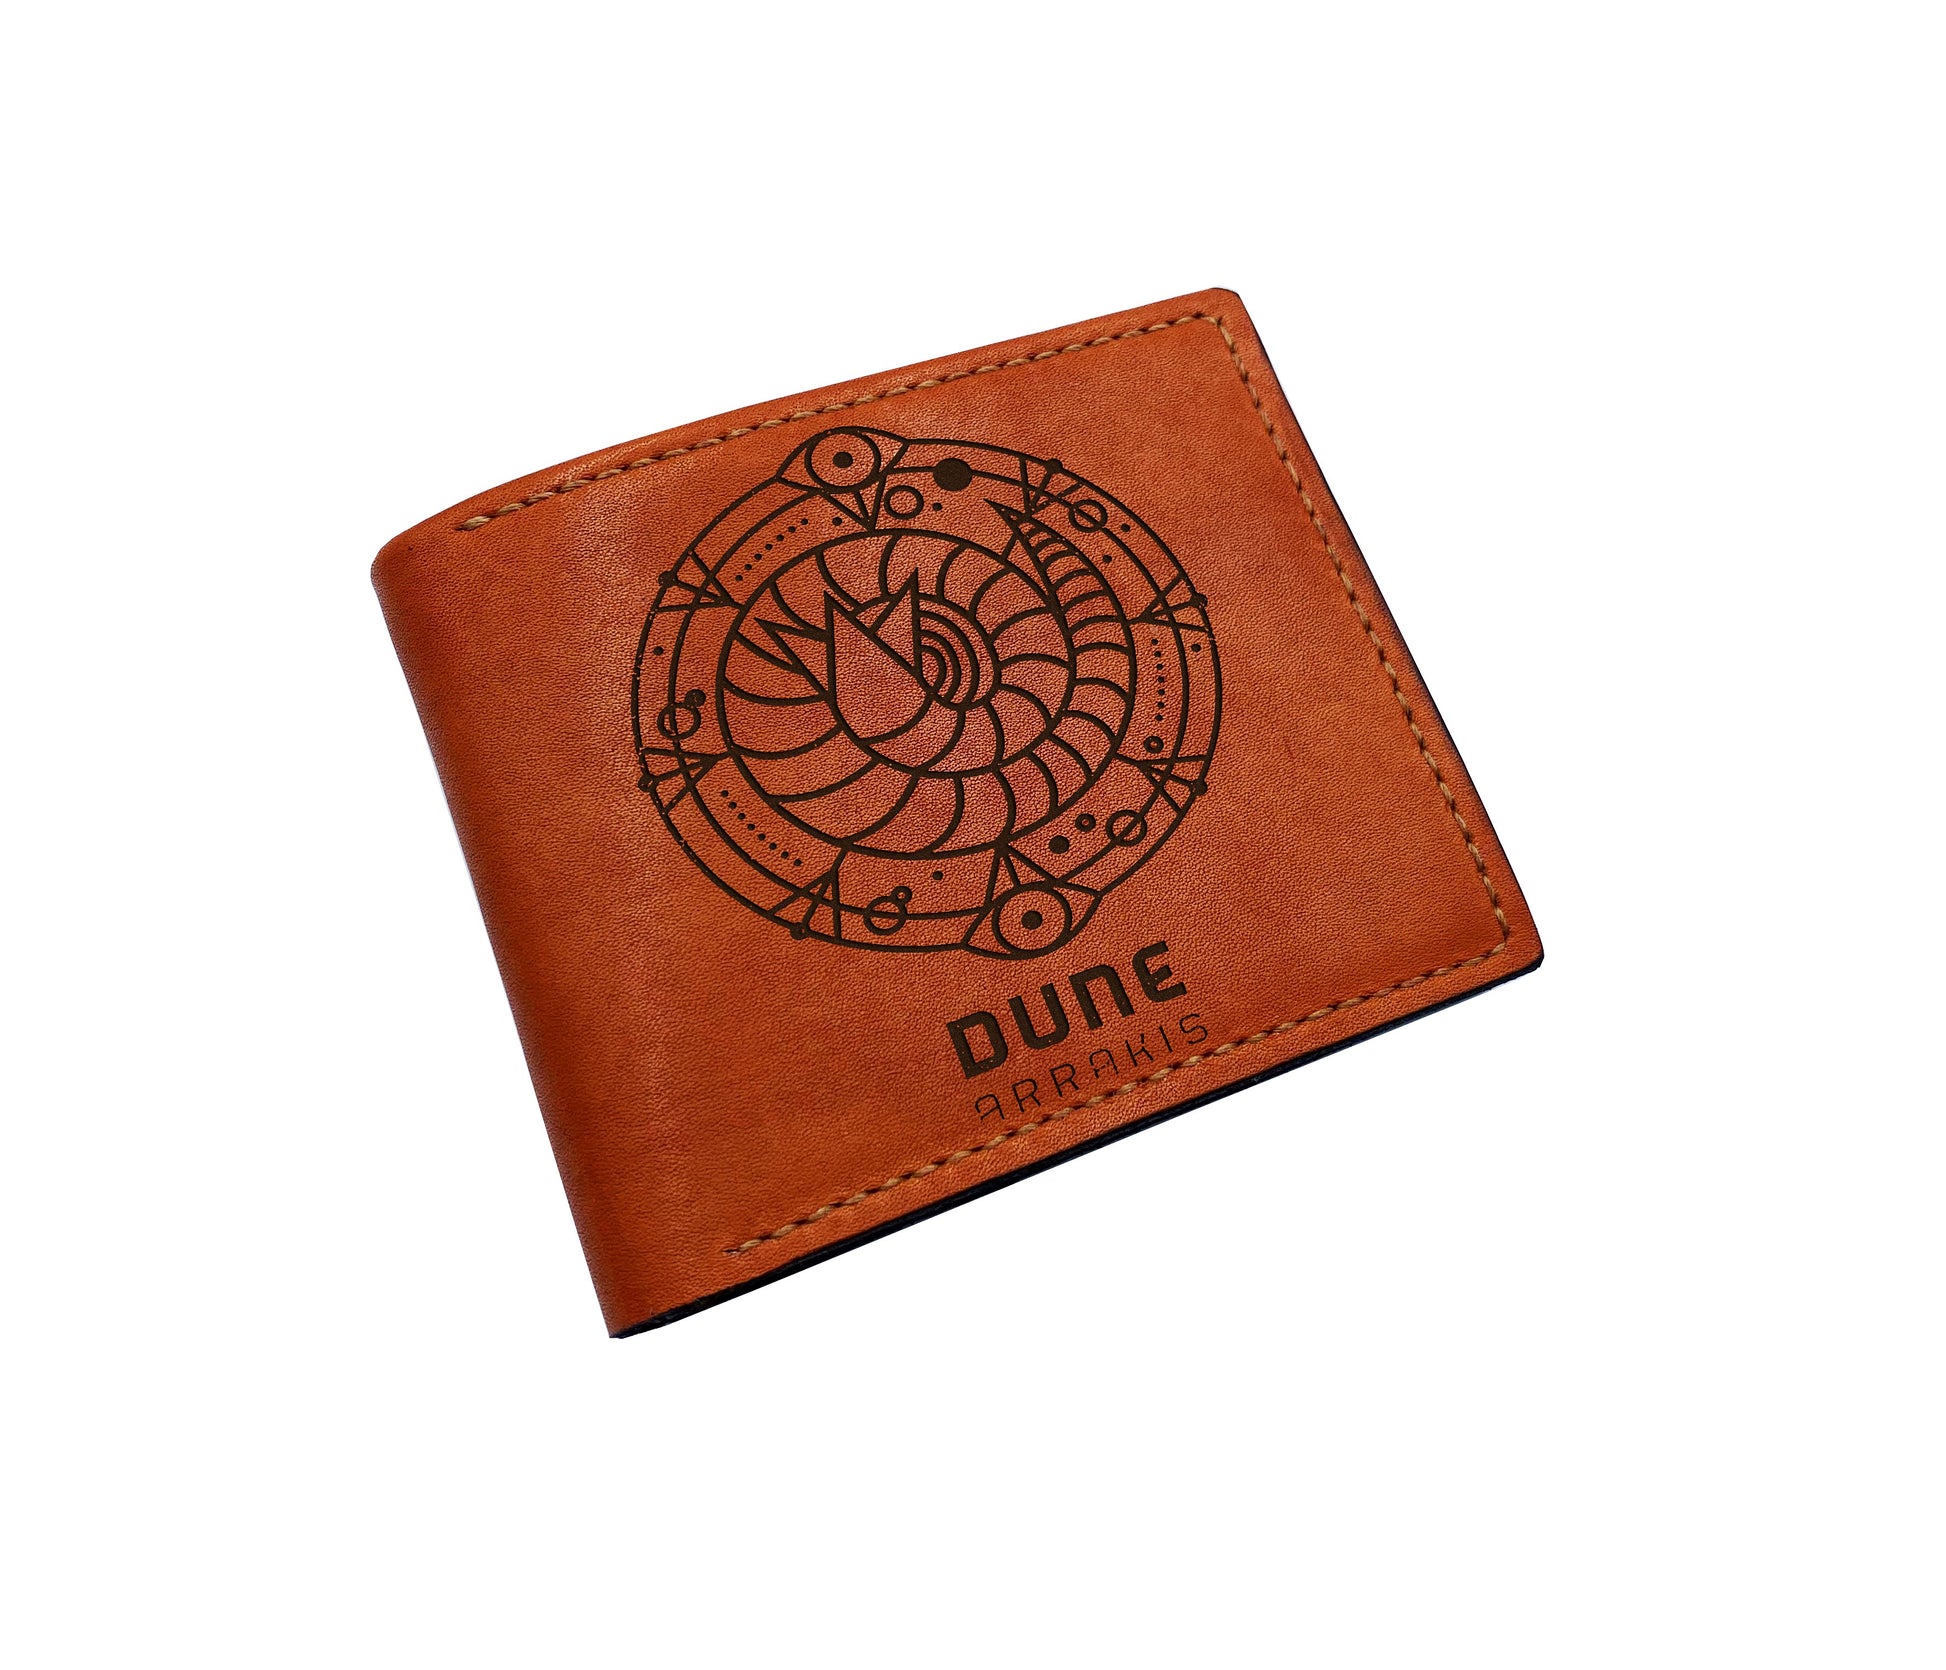 Dune symbol customized leather men's wallet, shai-hulud sandworm leather present for men